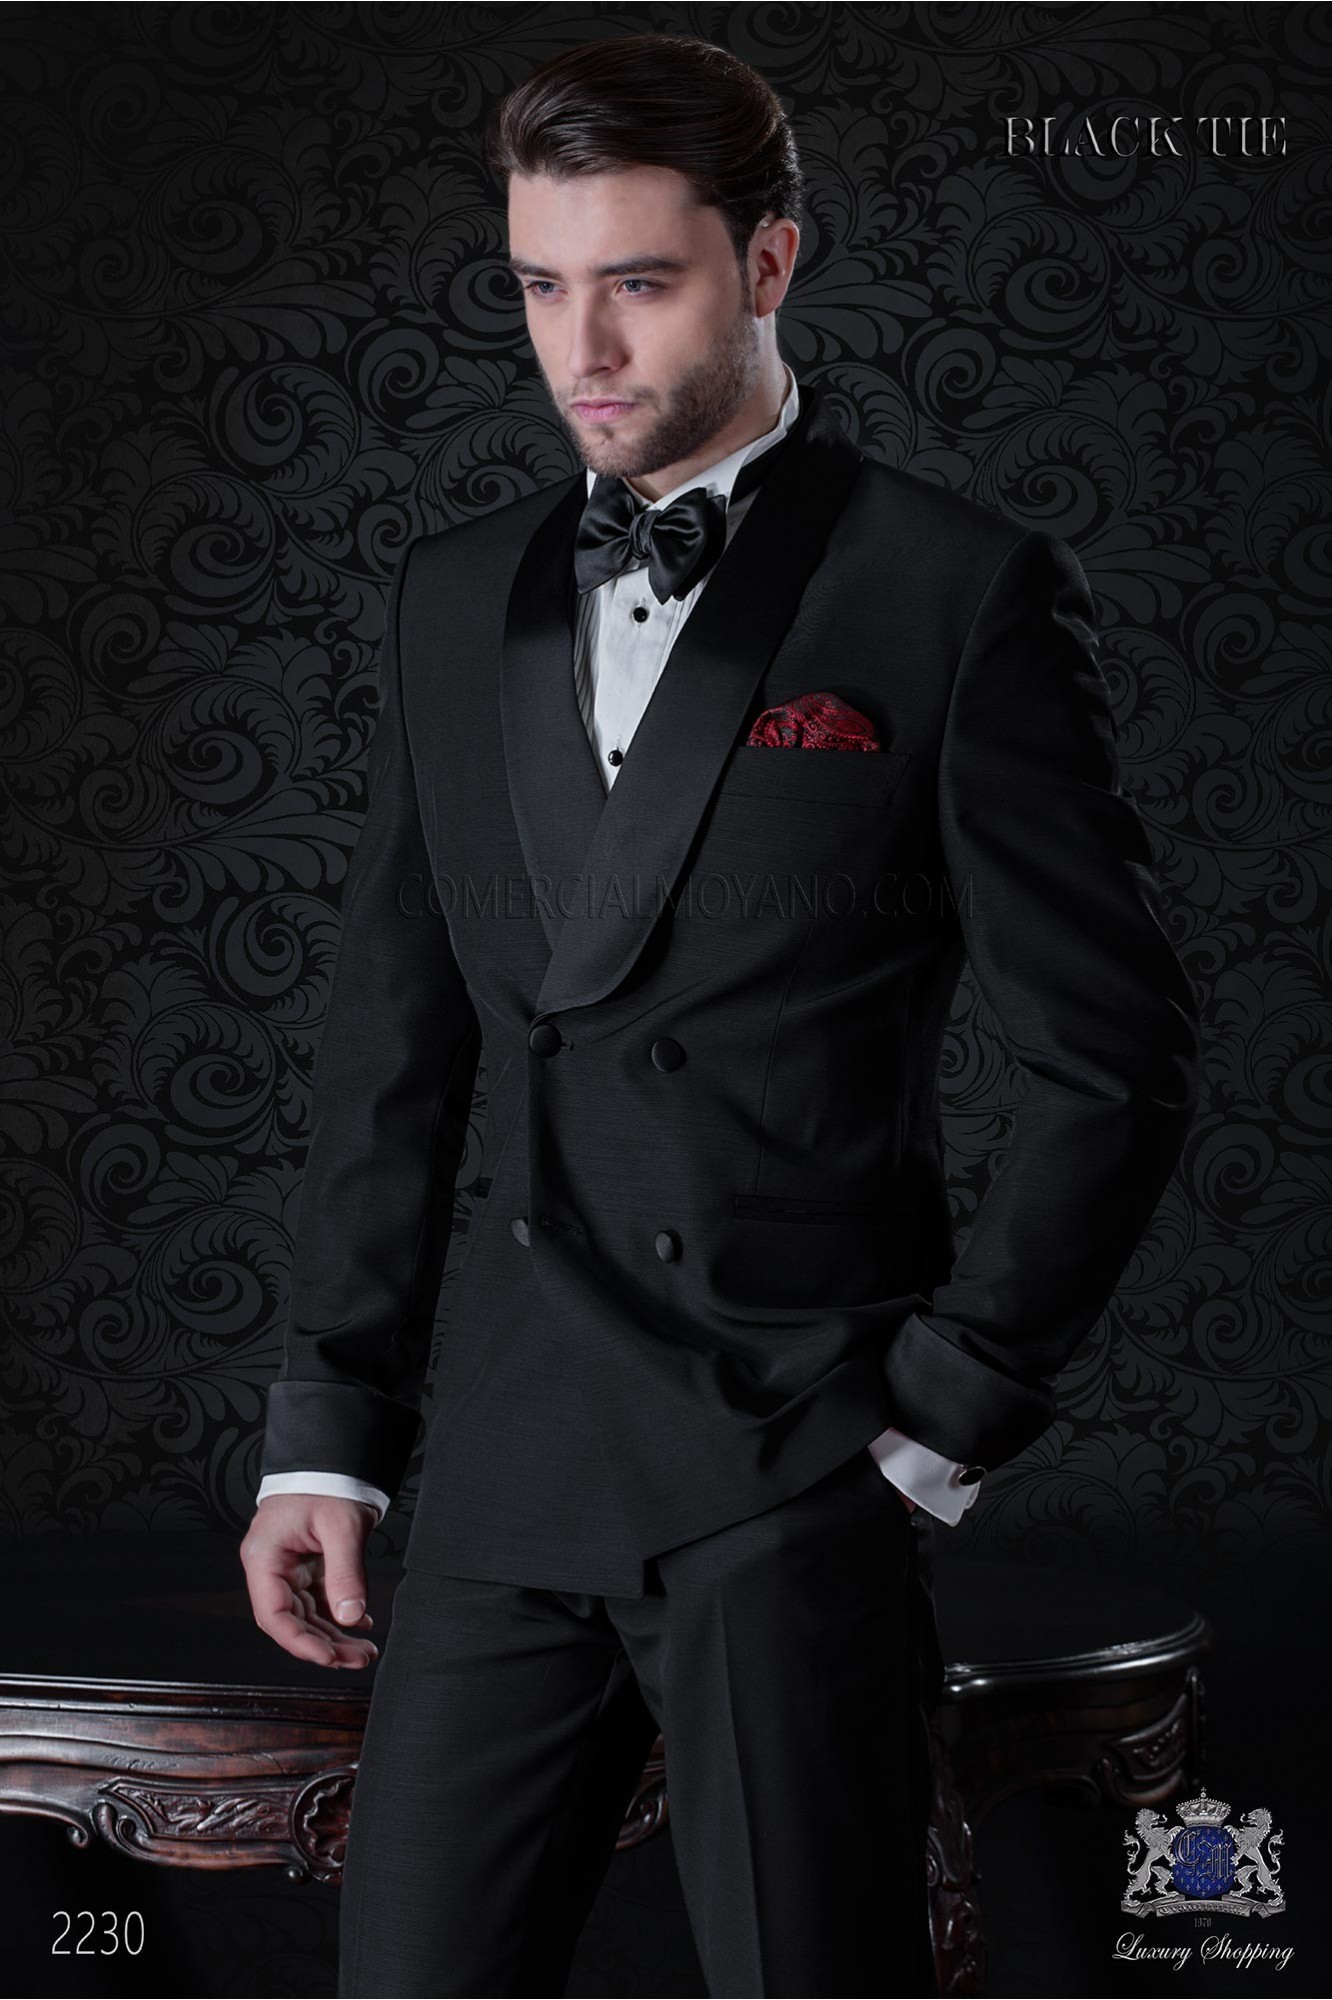 Esmoquin italiano negro cruzado con solapa chal de raso. Tejido mixto lana modelo: 2230 Mario Moyano colección Black Tie